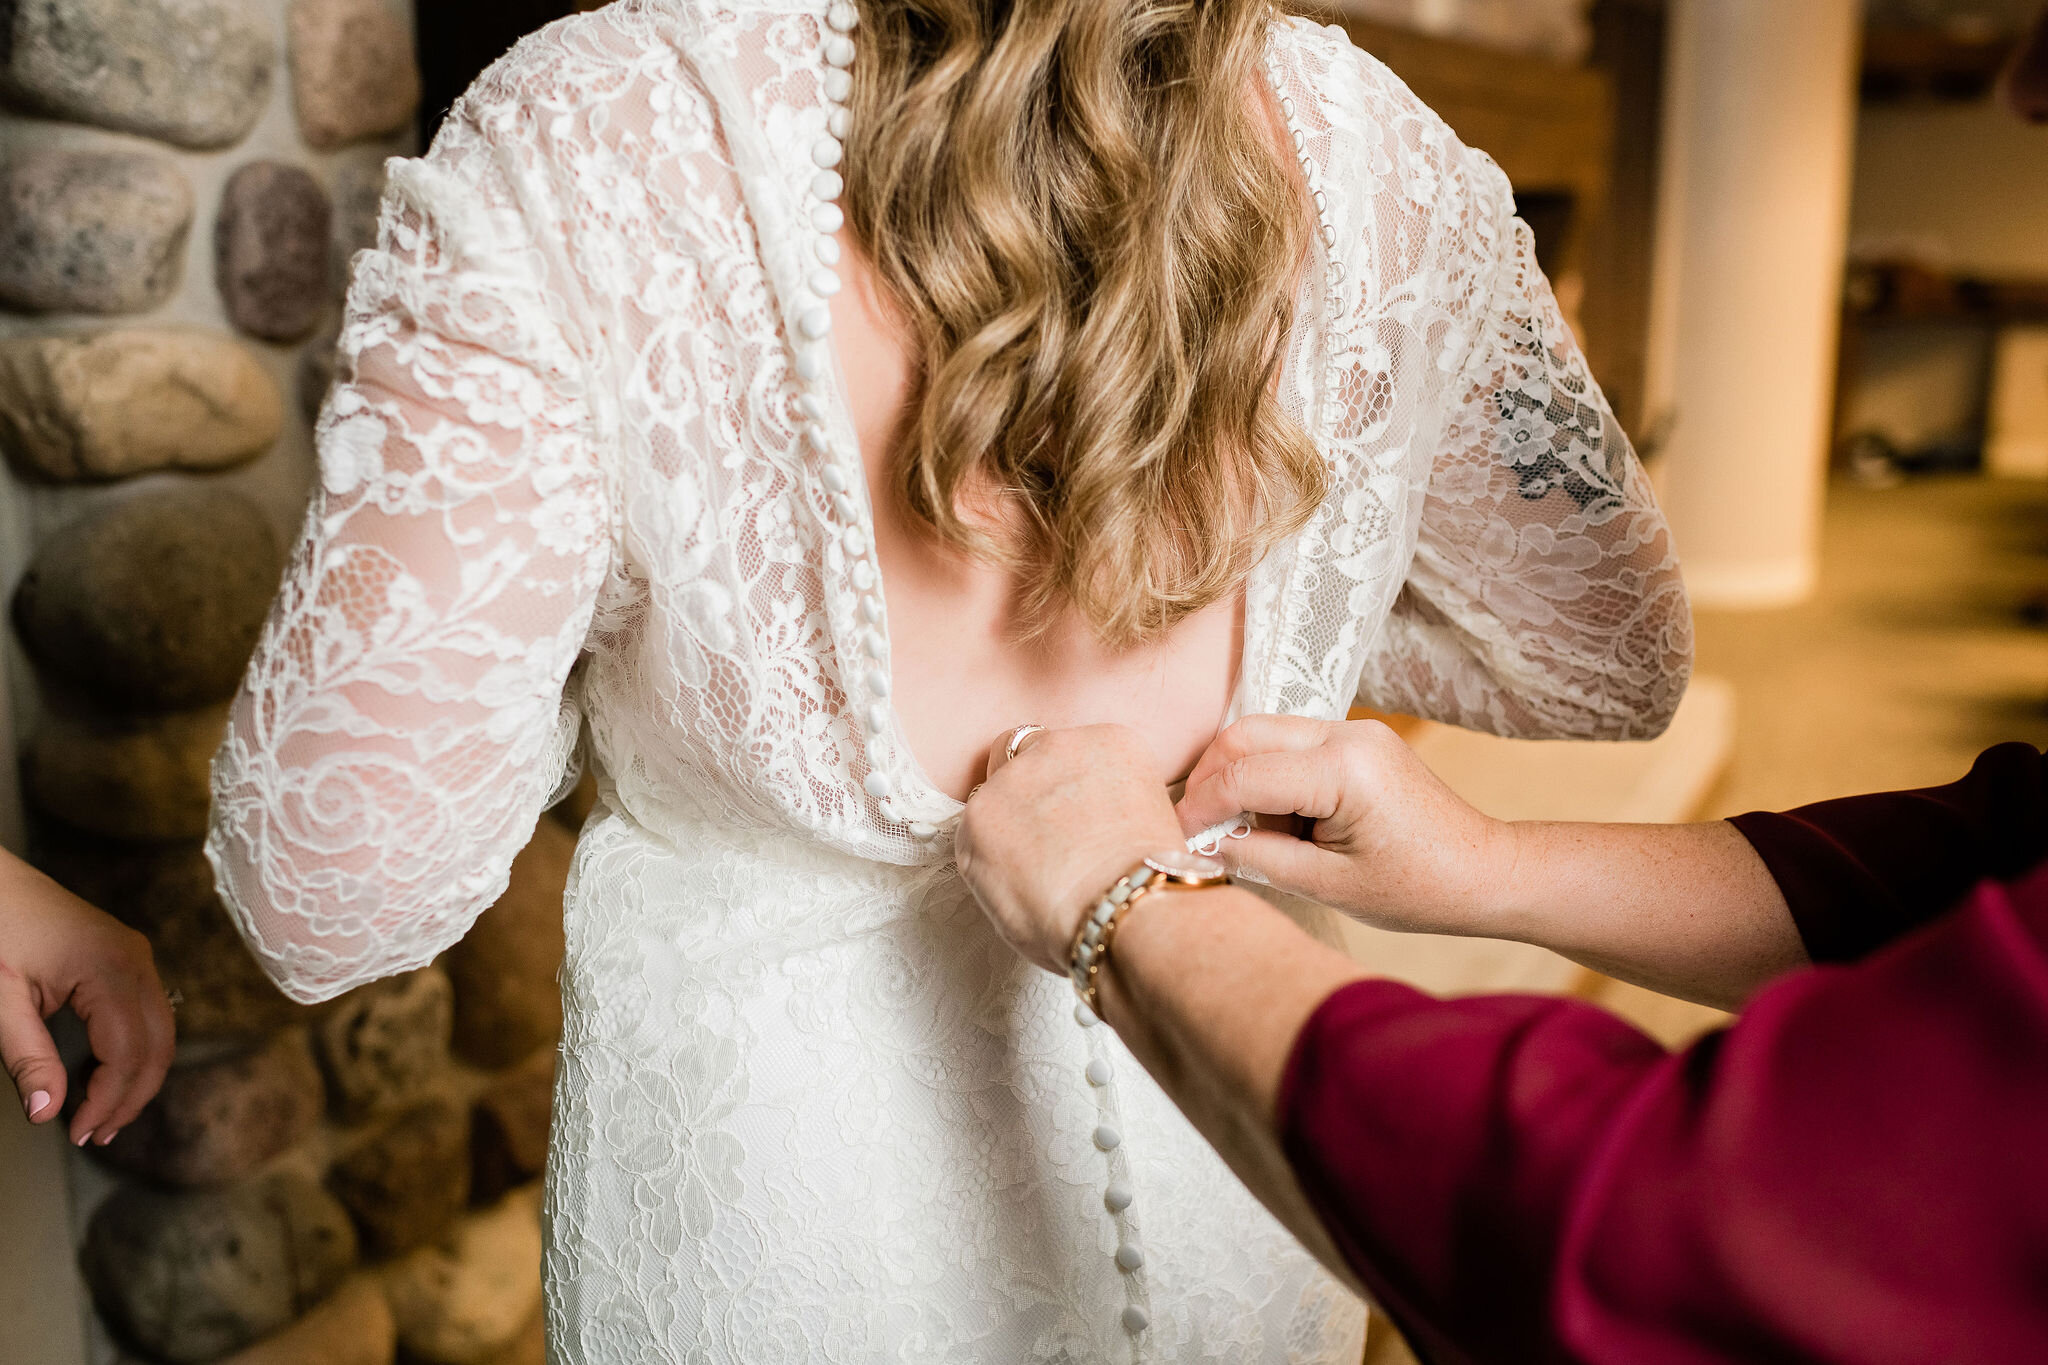 Bride's mom buttoning up bride's dress